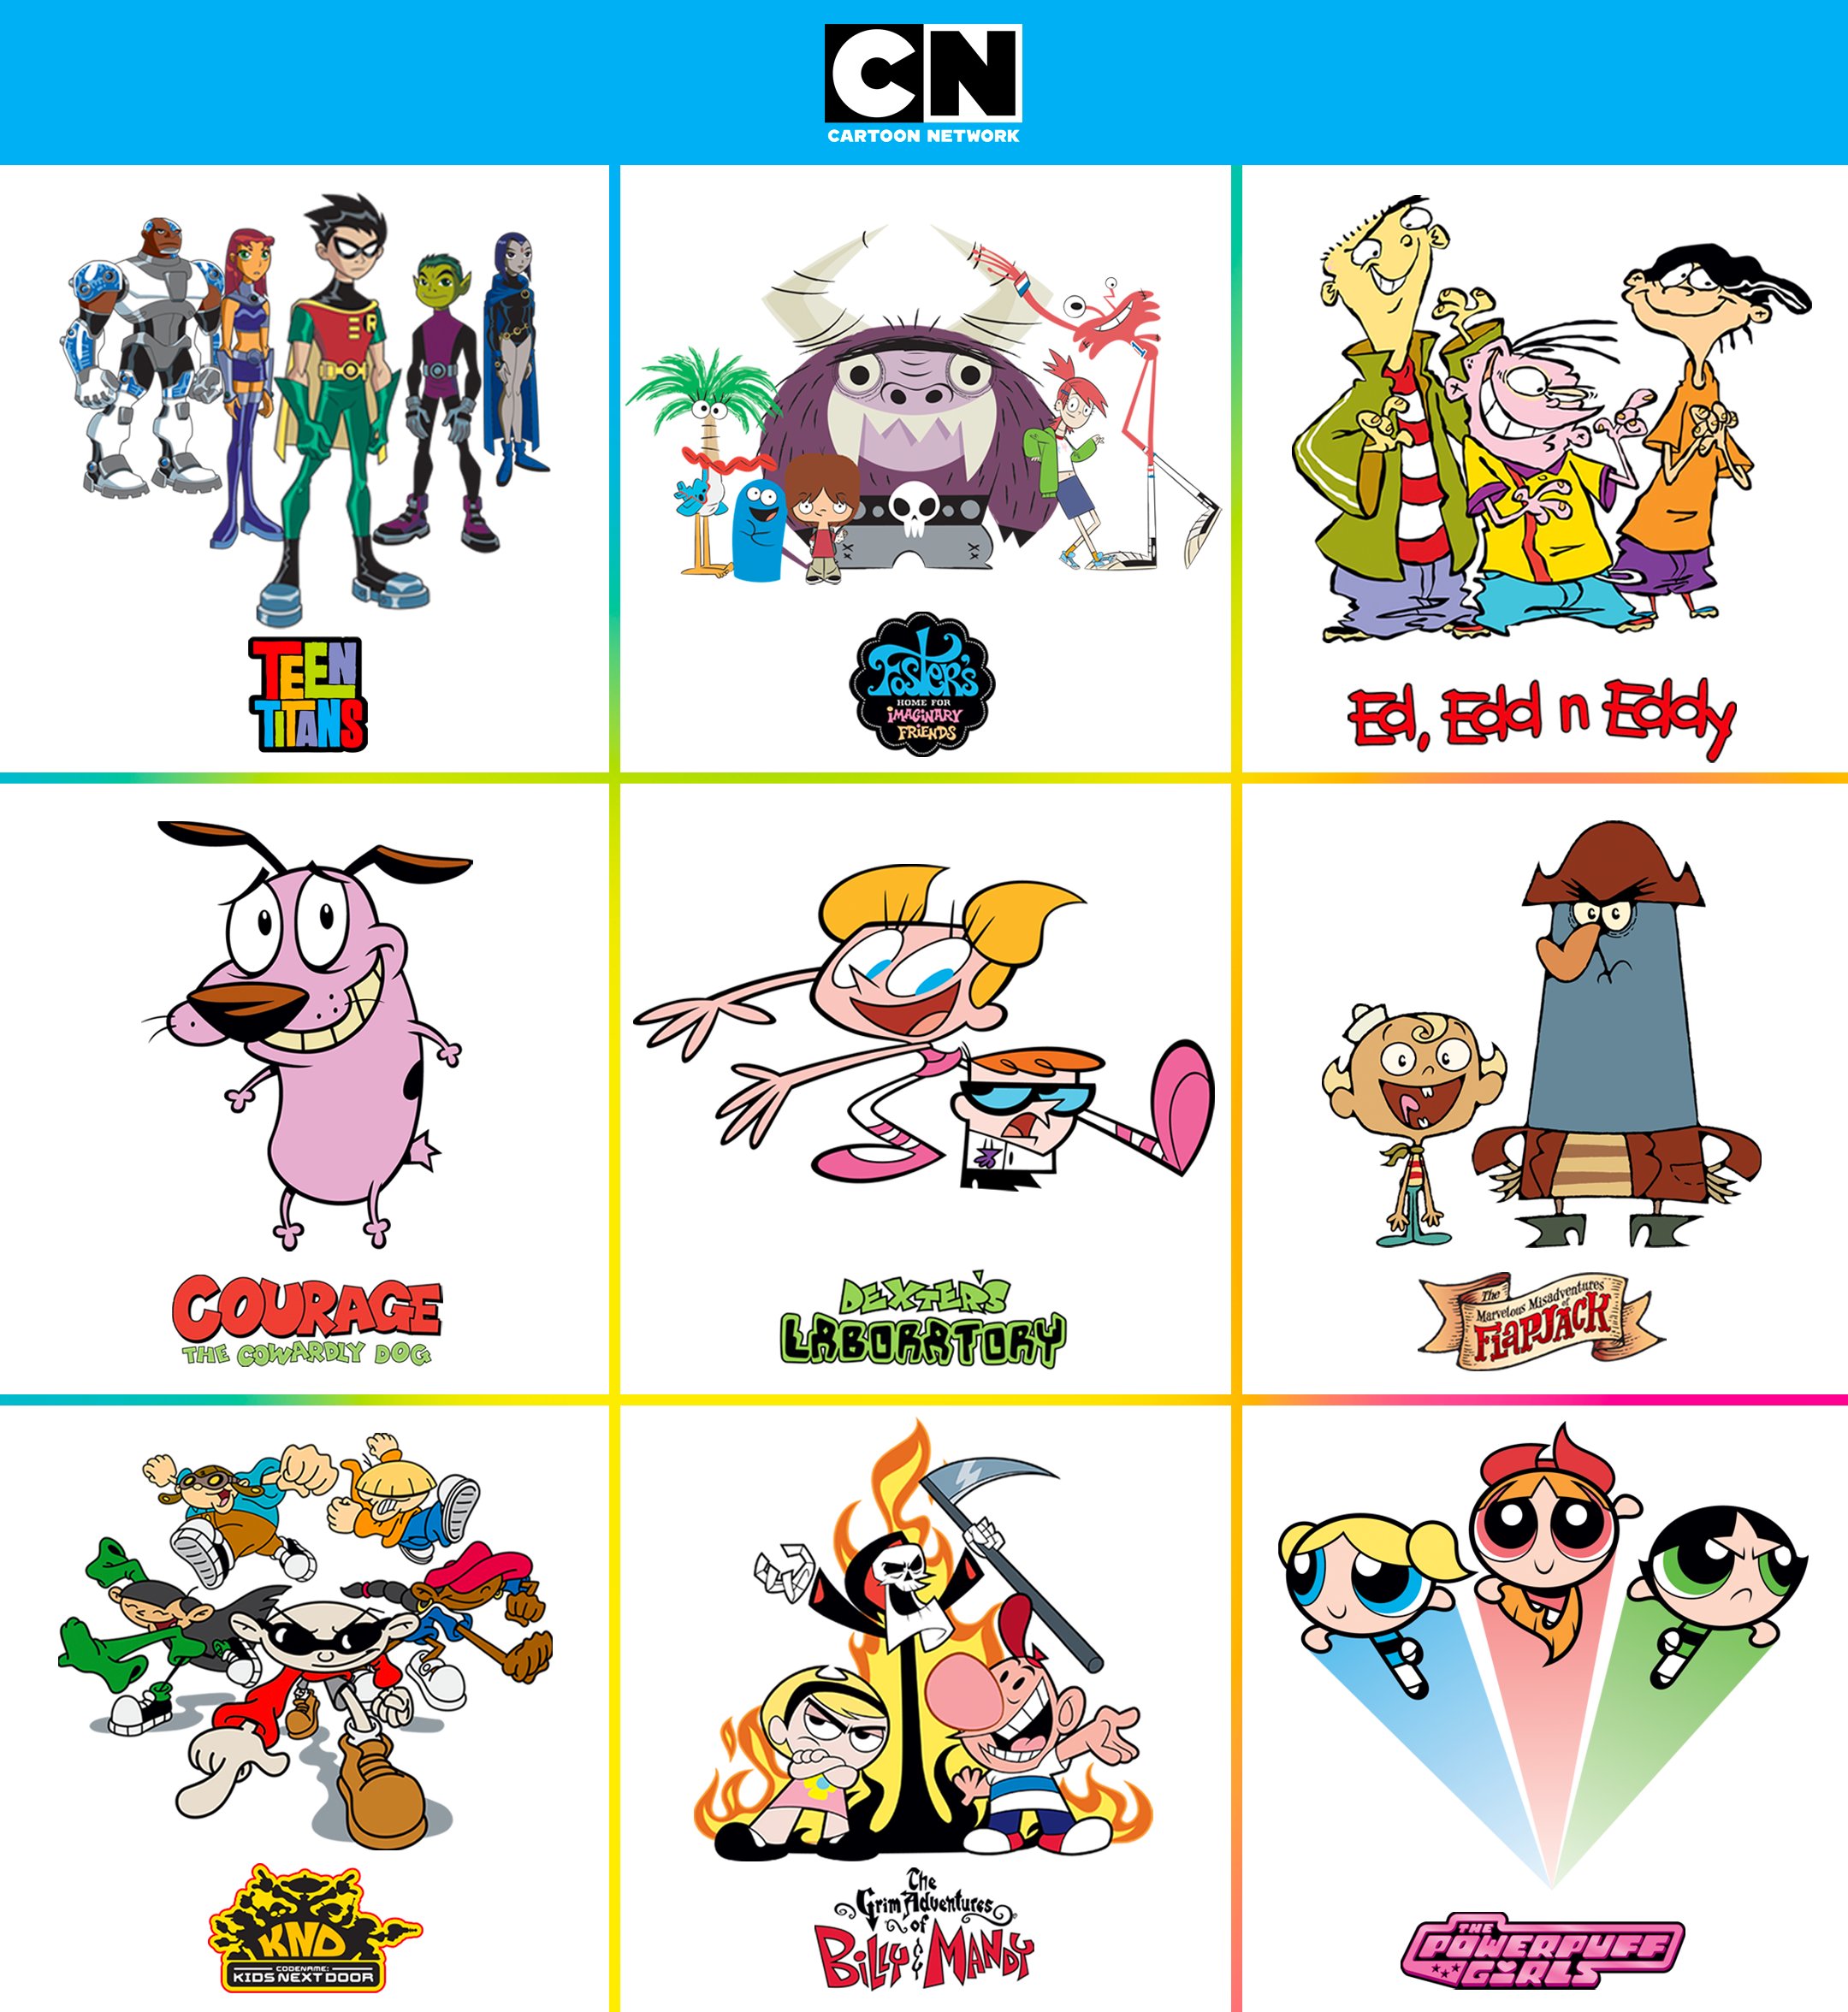 Cartoon Network on Twitter: 